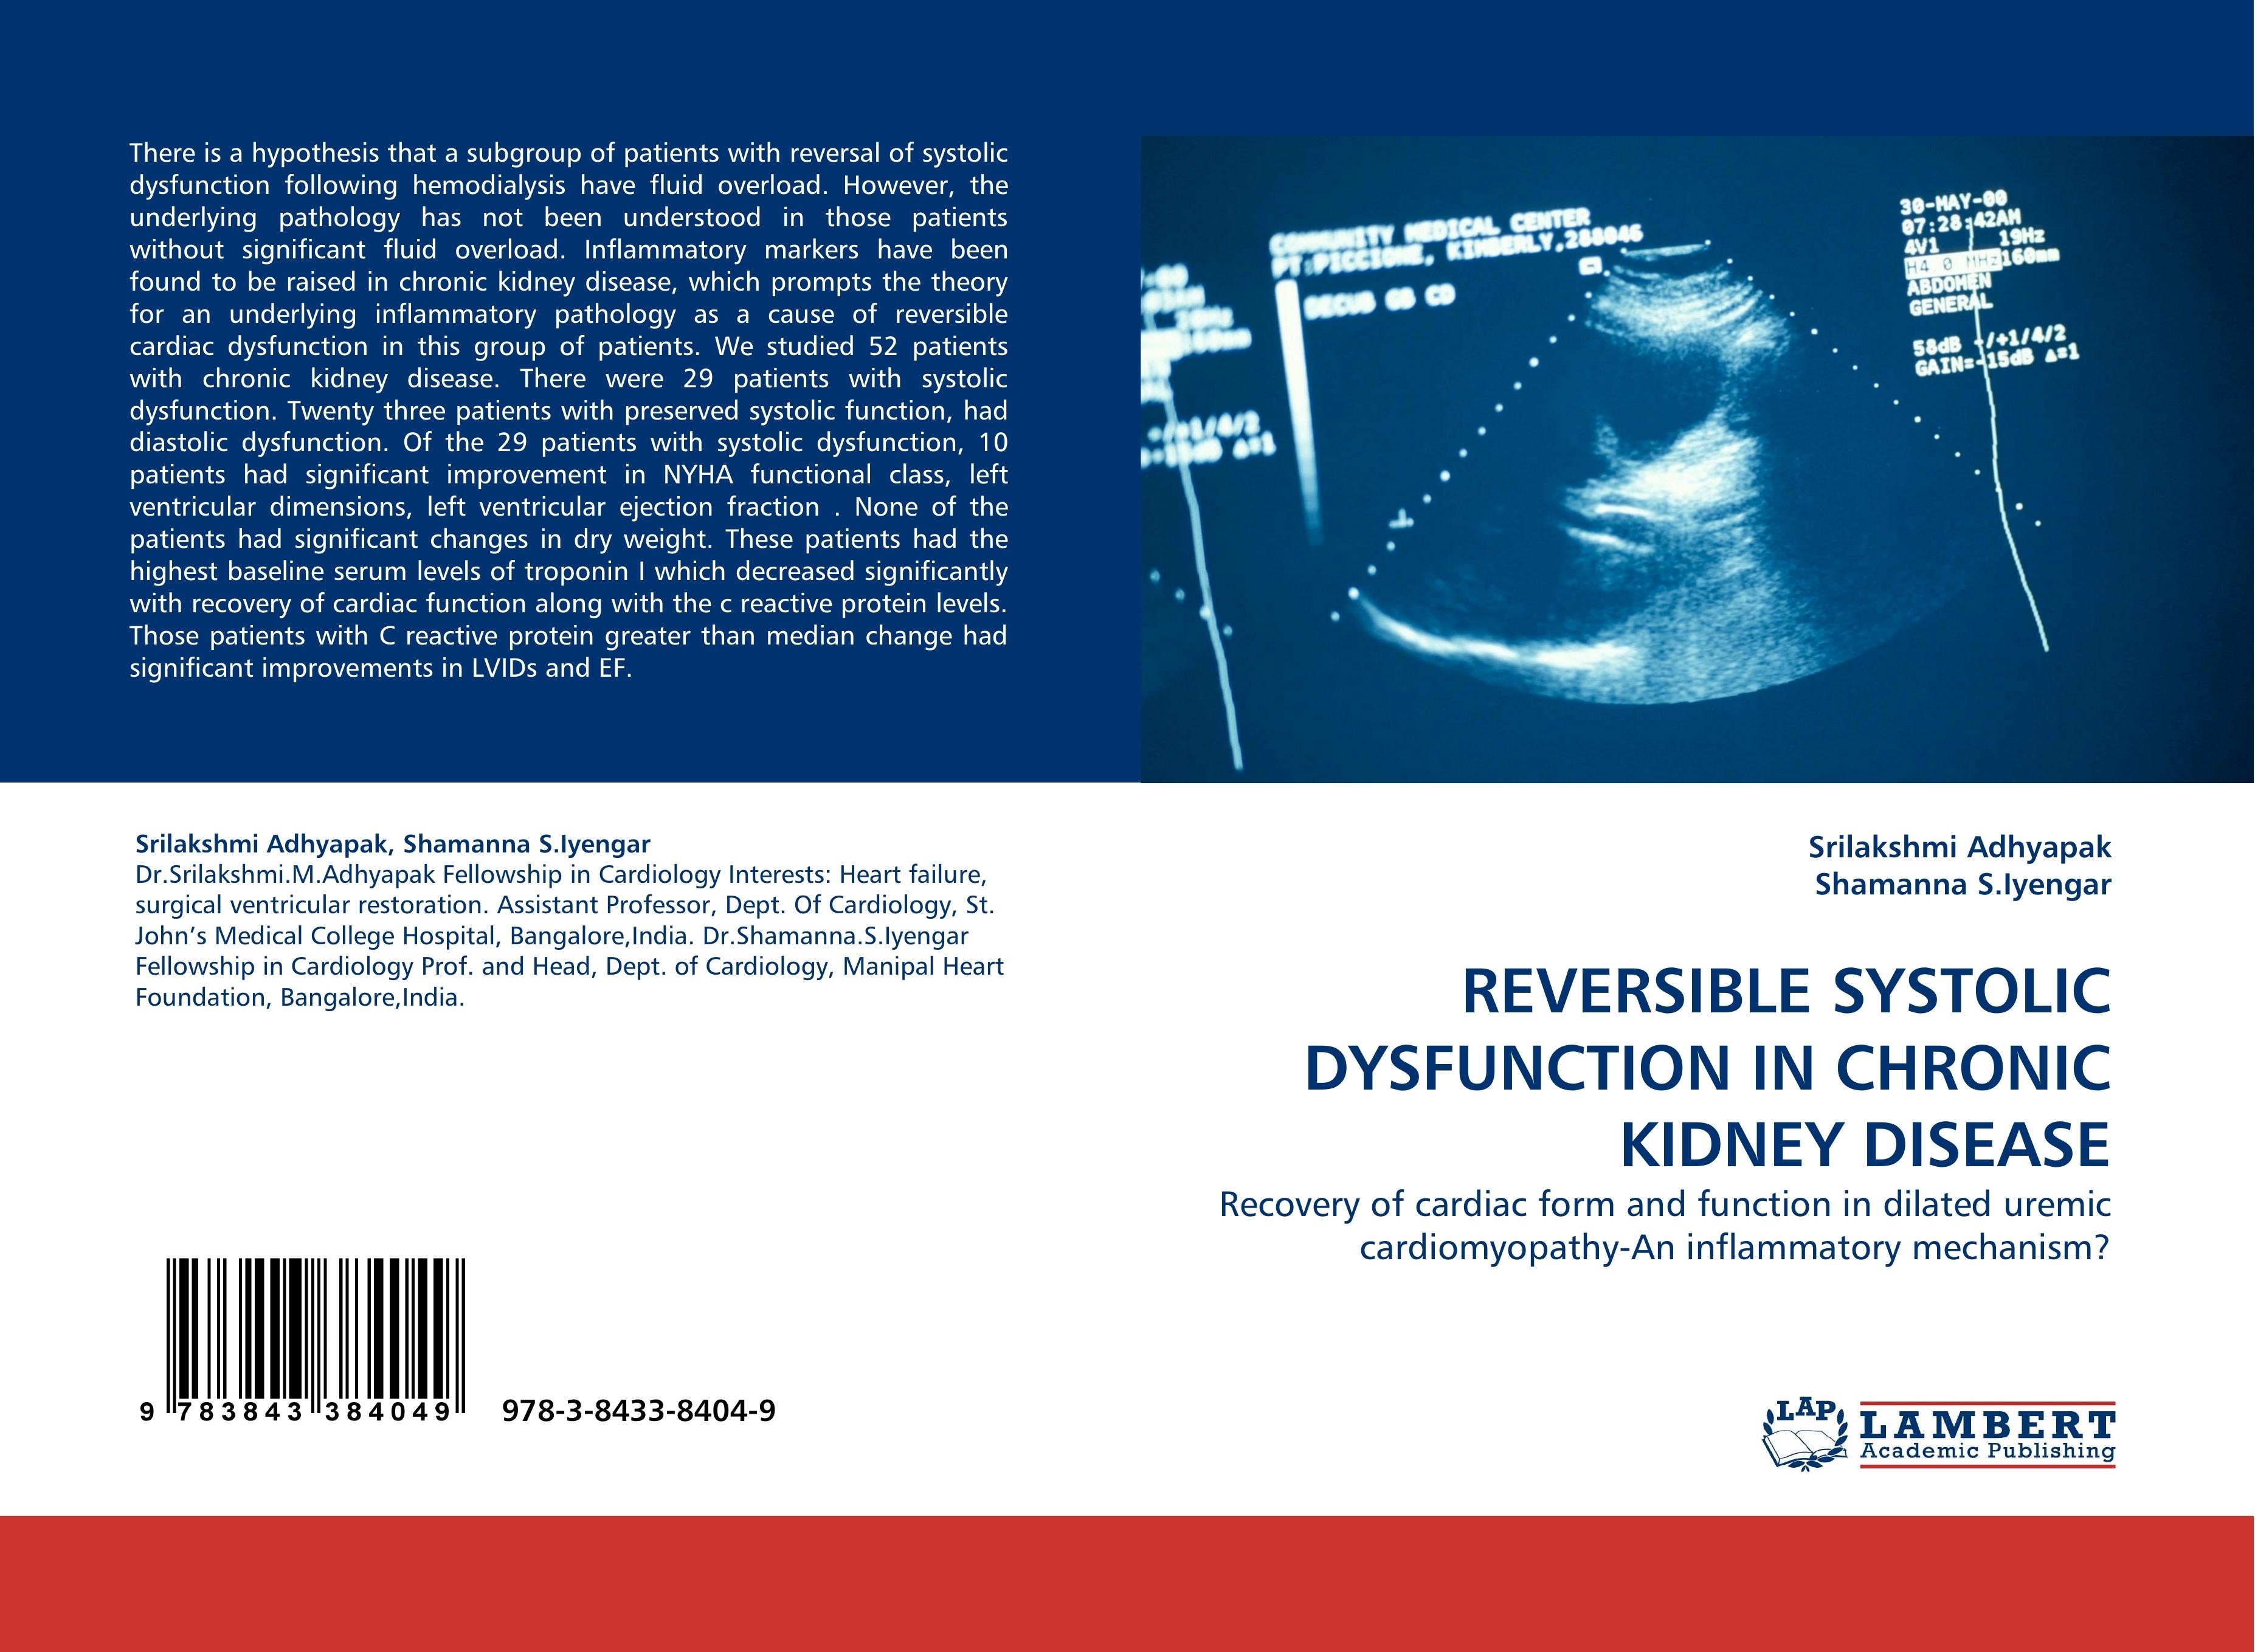 REVERSIBLE SYSTOLIC DYSFUNCTION IN CHRONIC KIDNEY DISEASE - Srilakshmi Adhyapak Shamanna S.Iyengar